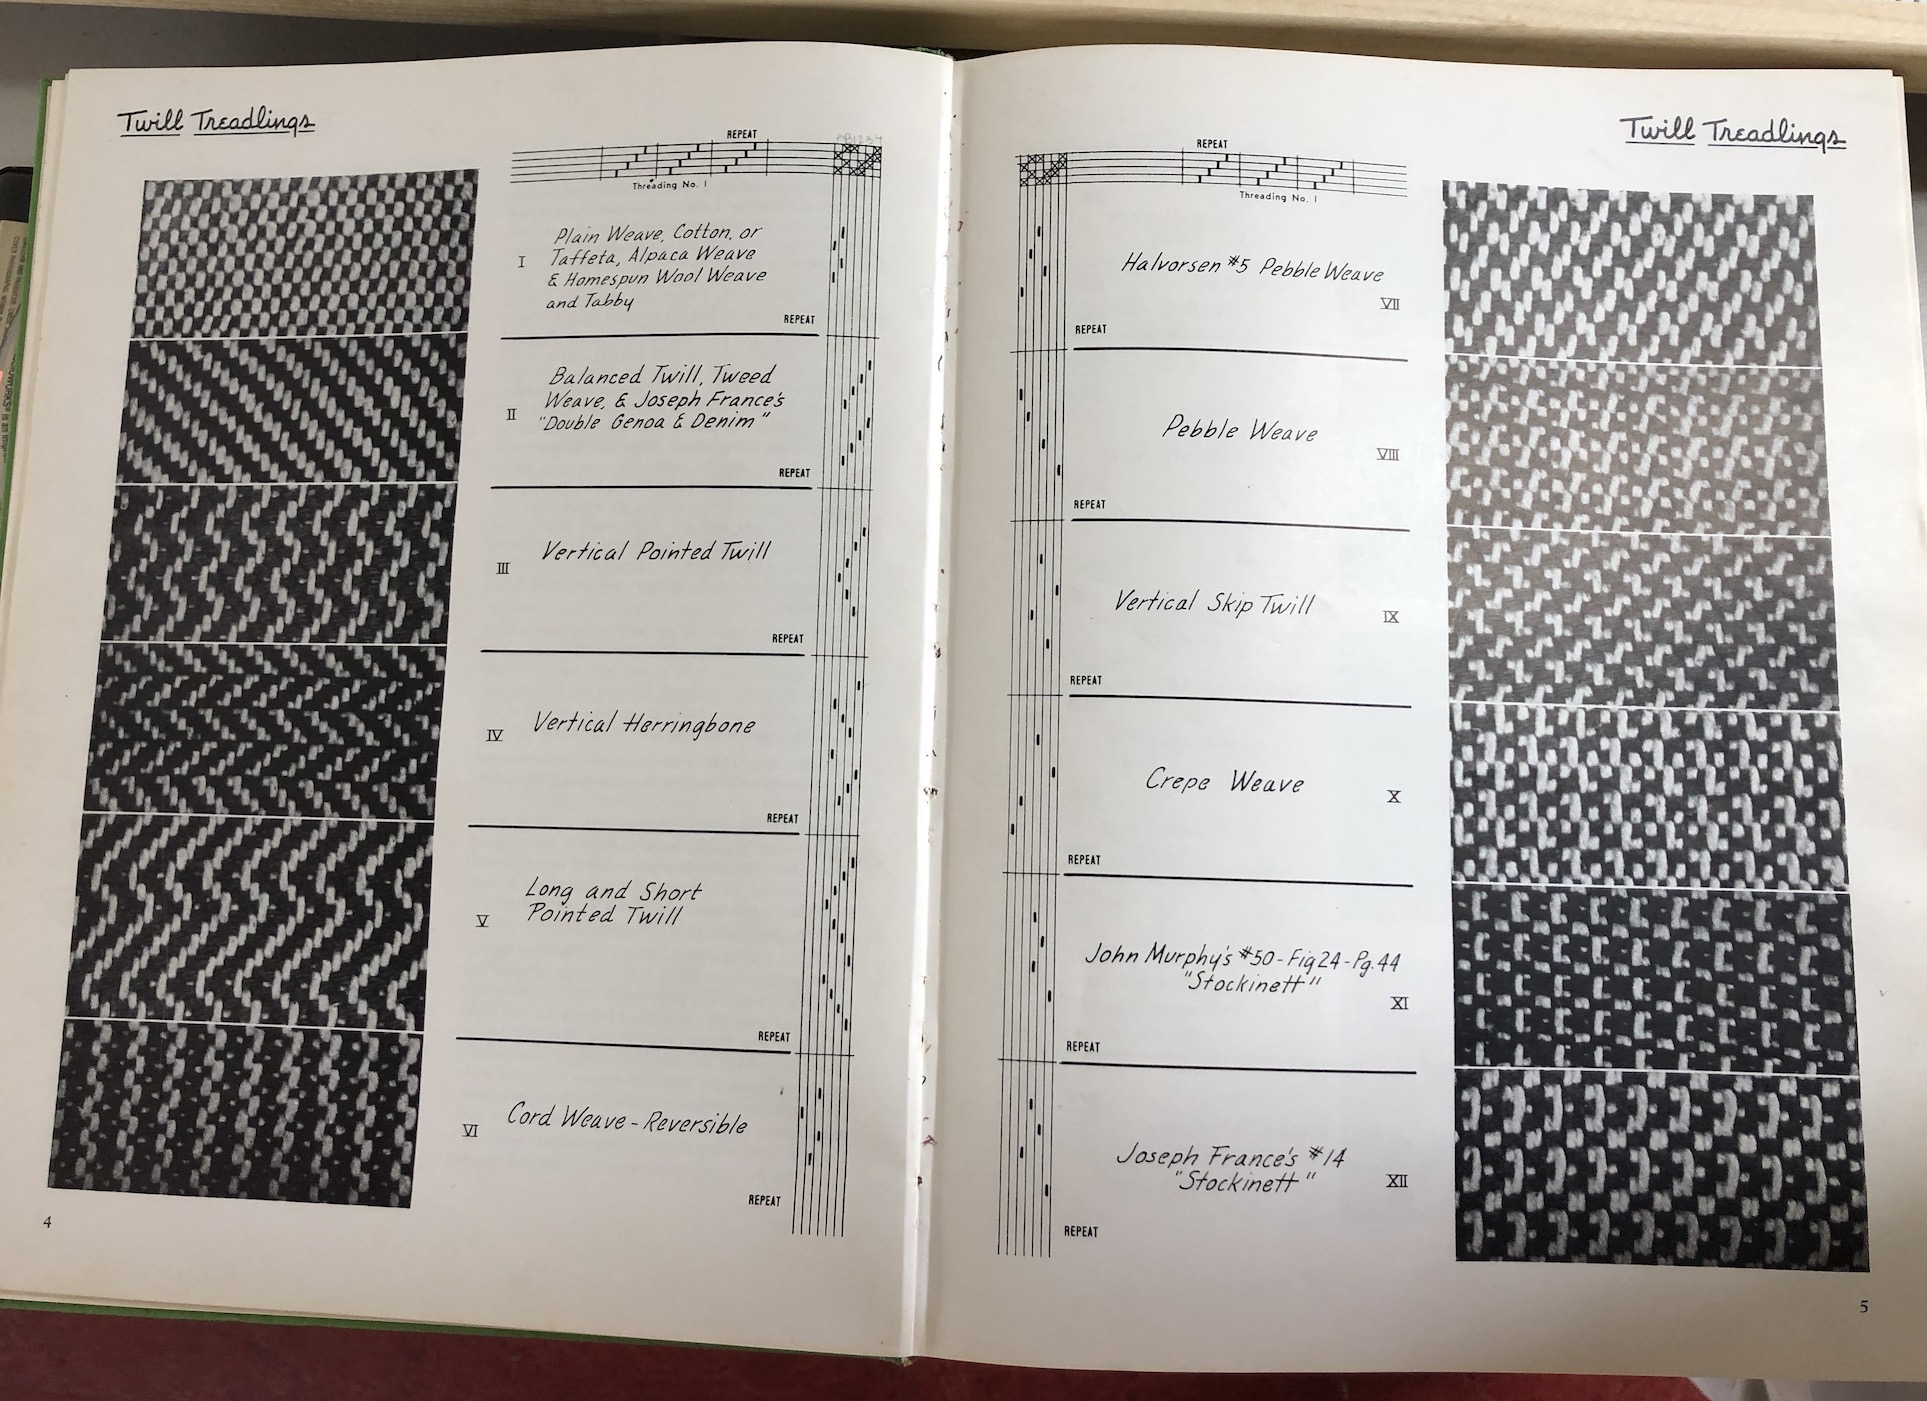 A Handweaver's Pattern Book, Revised Edition, by Marguerite P. Davison